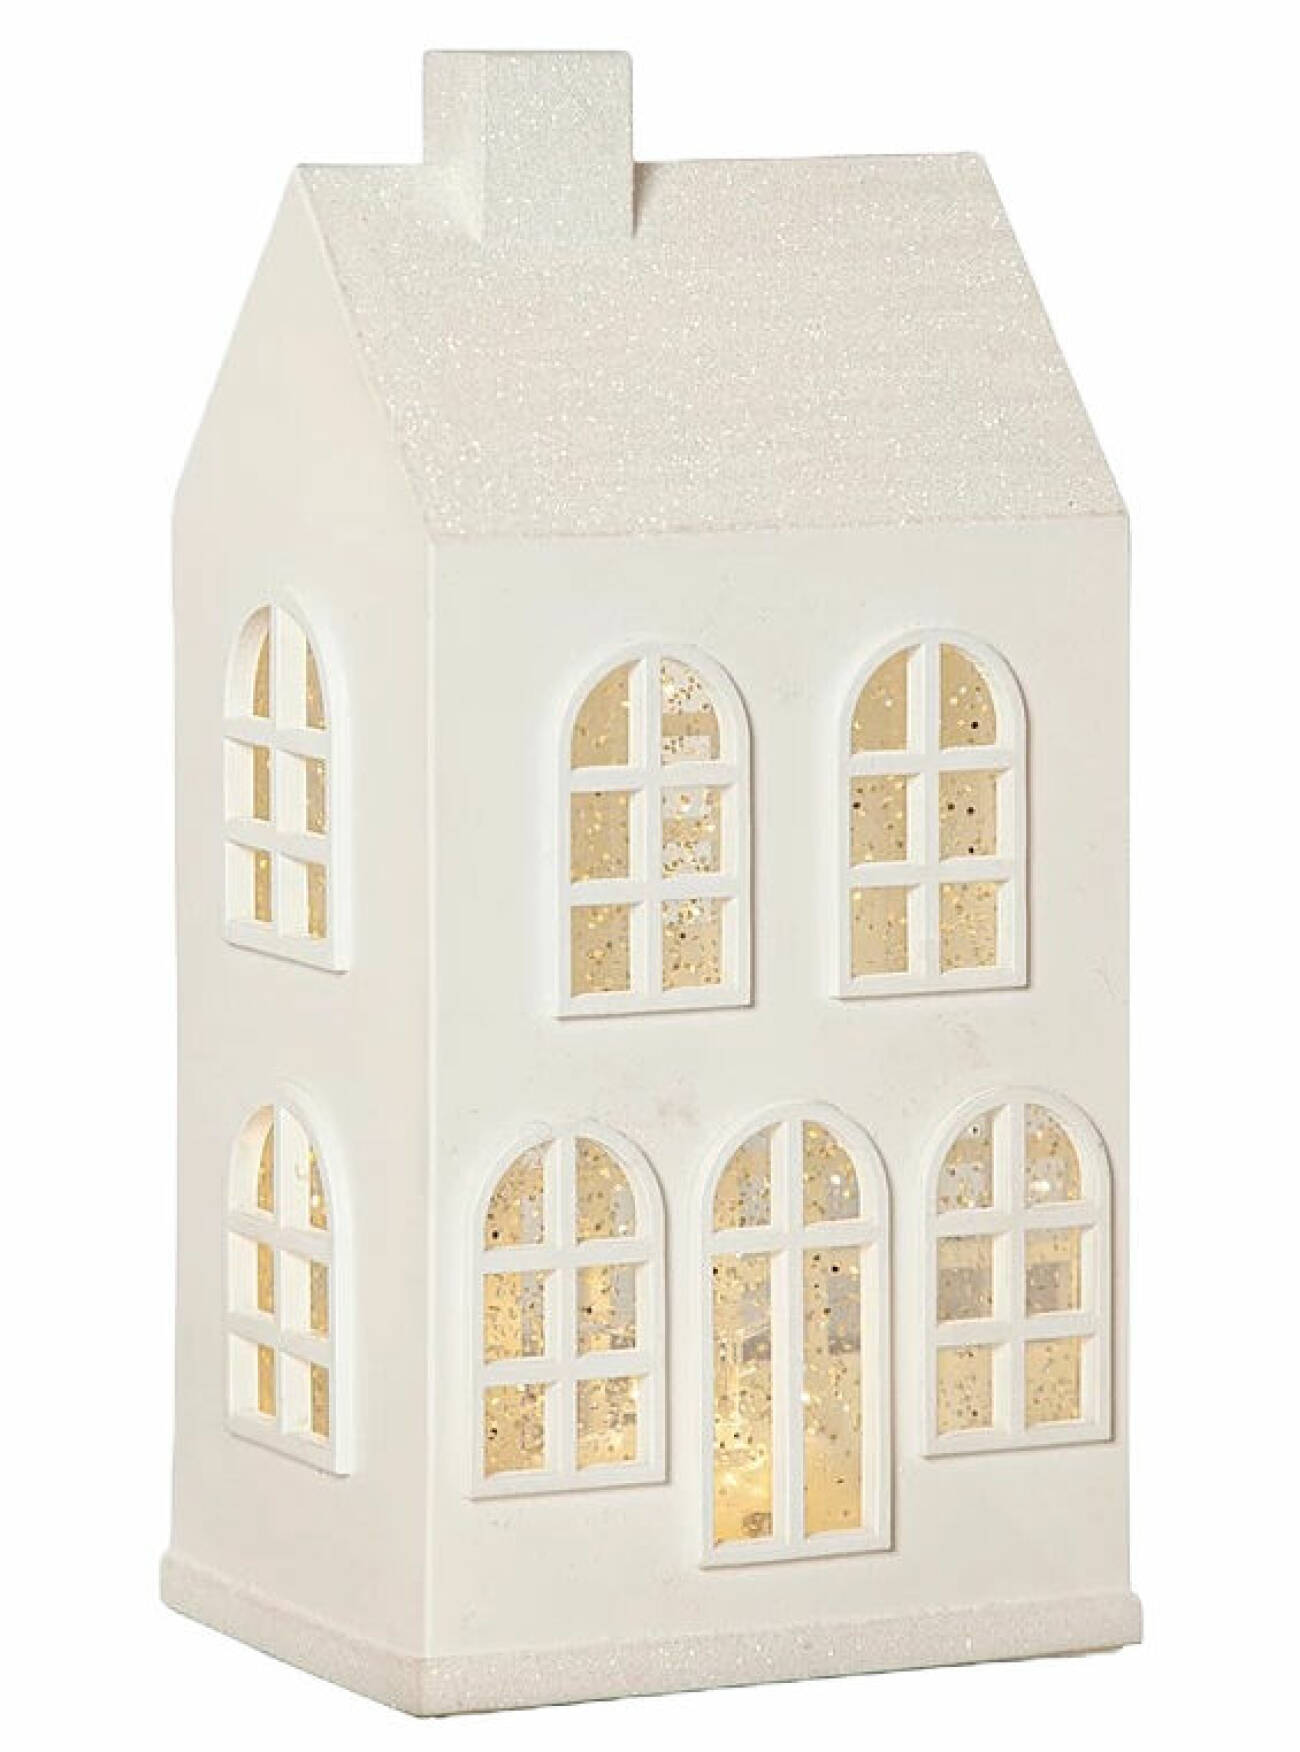 vitt hus som juldekoration med lyse